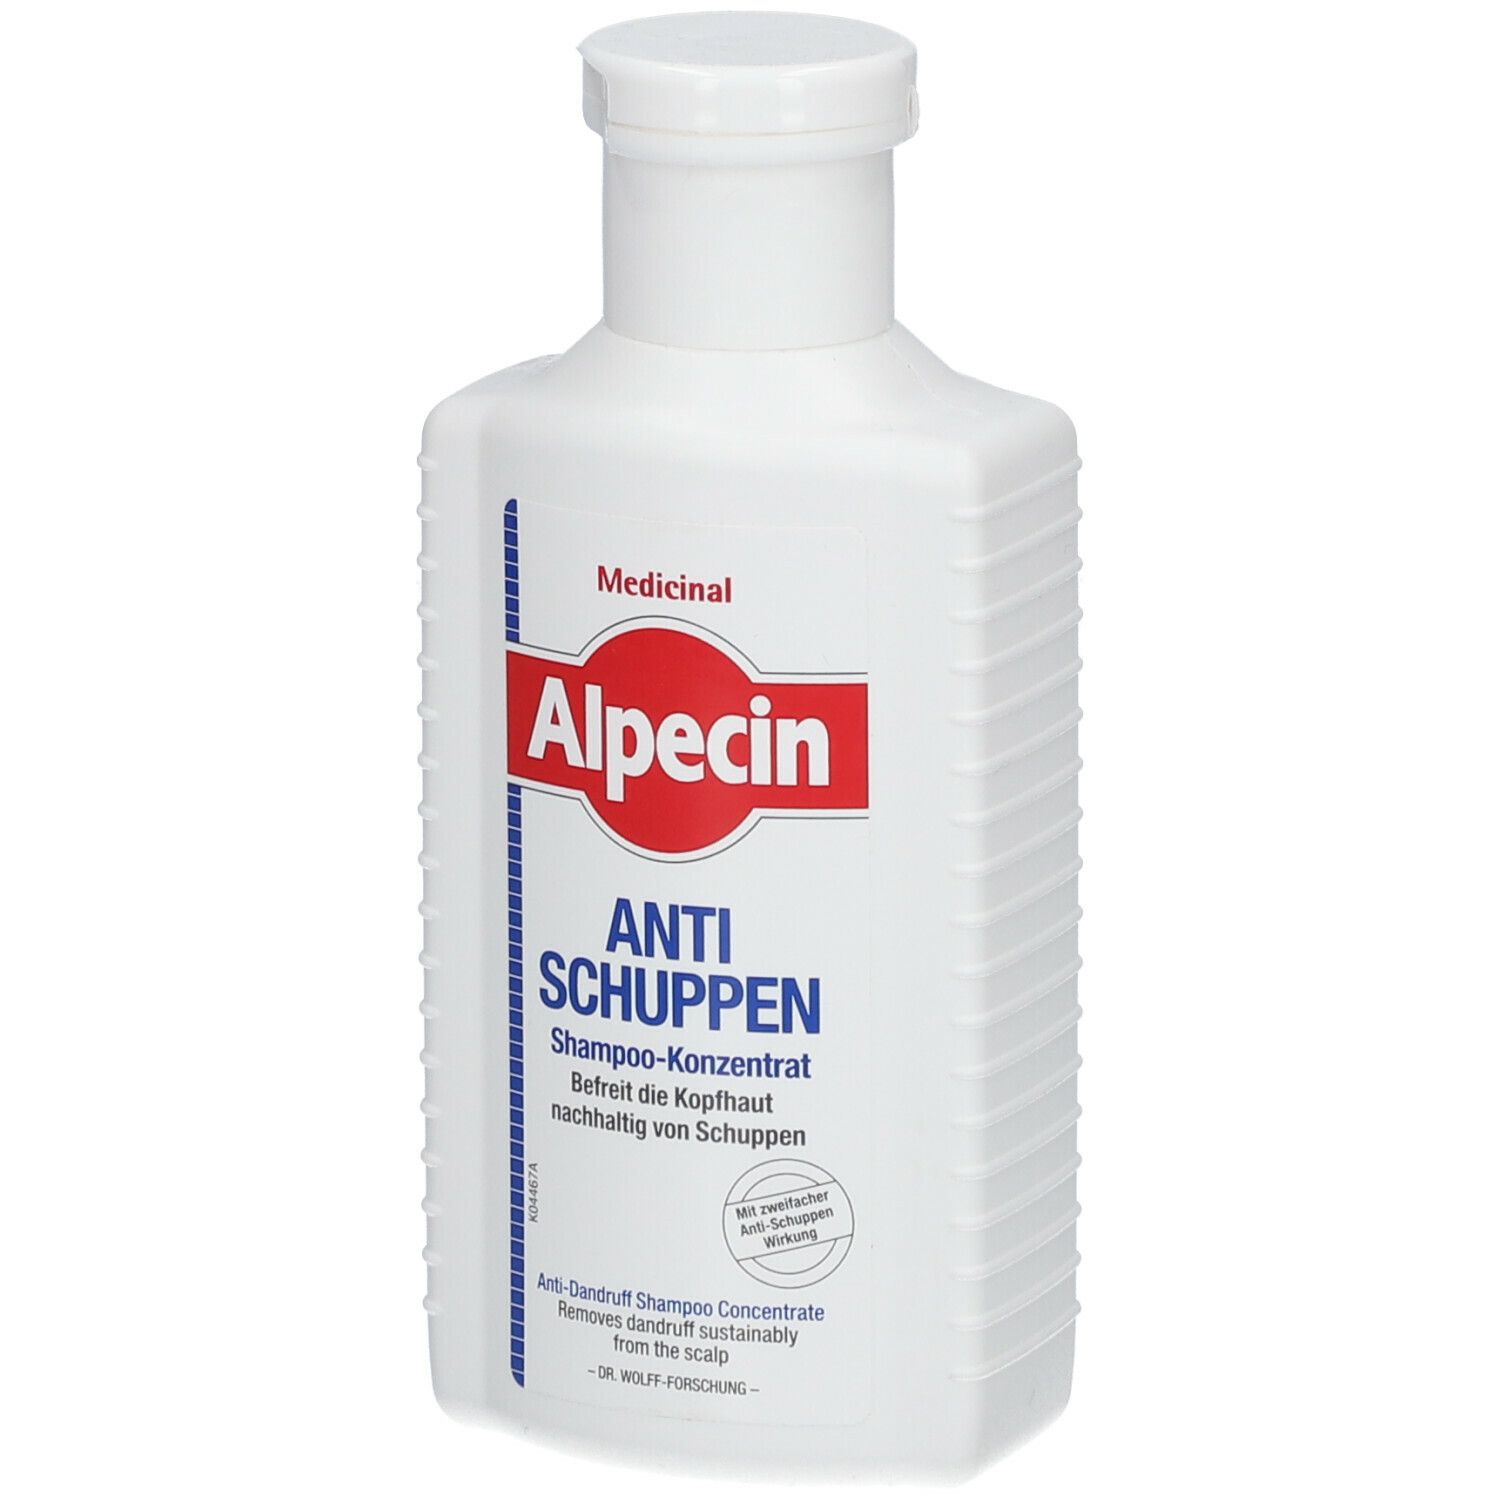 Alpecin Medicinal Shampoo-Konzentrat Anti-Schuppen